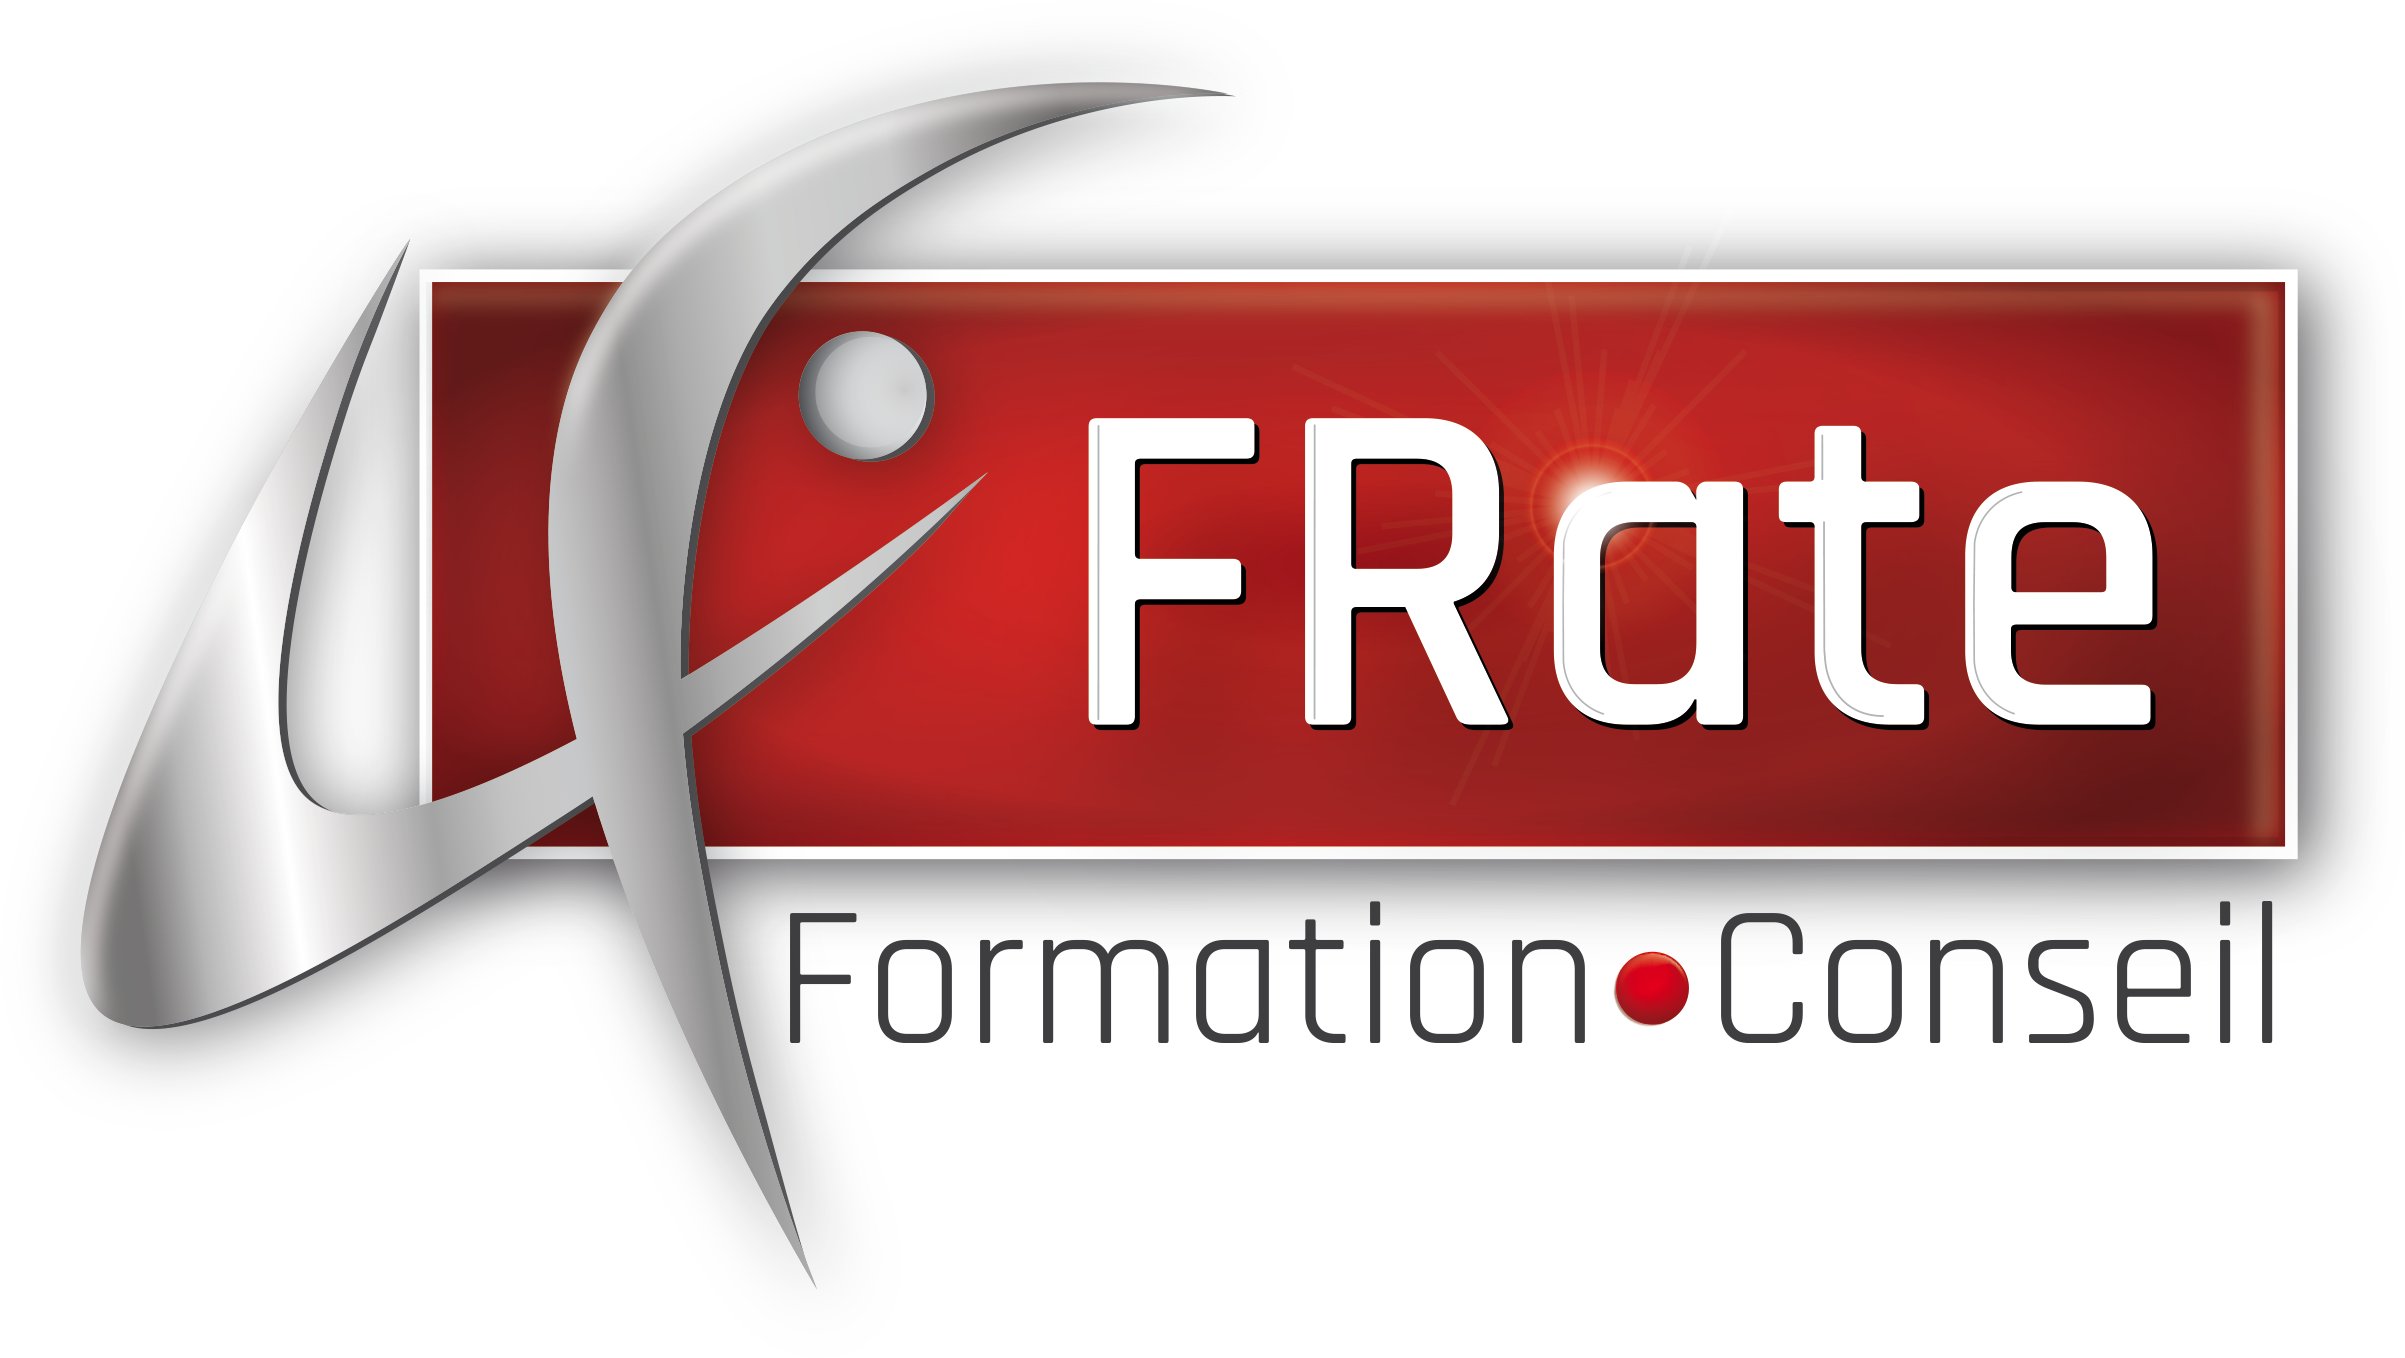 Logo FRATE Formation